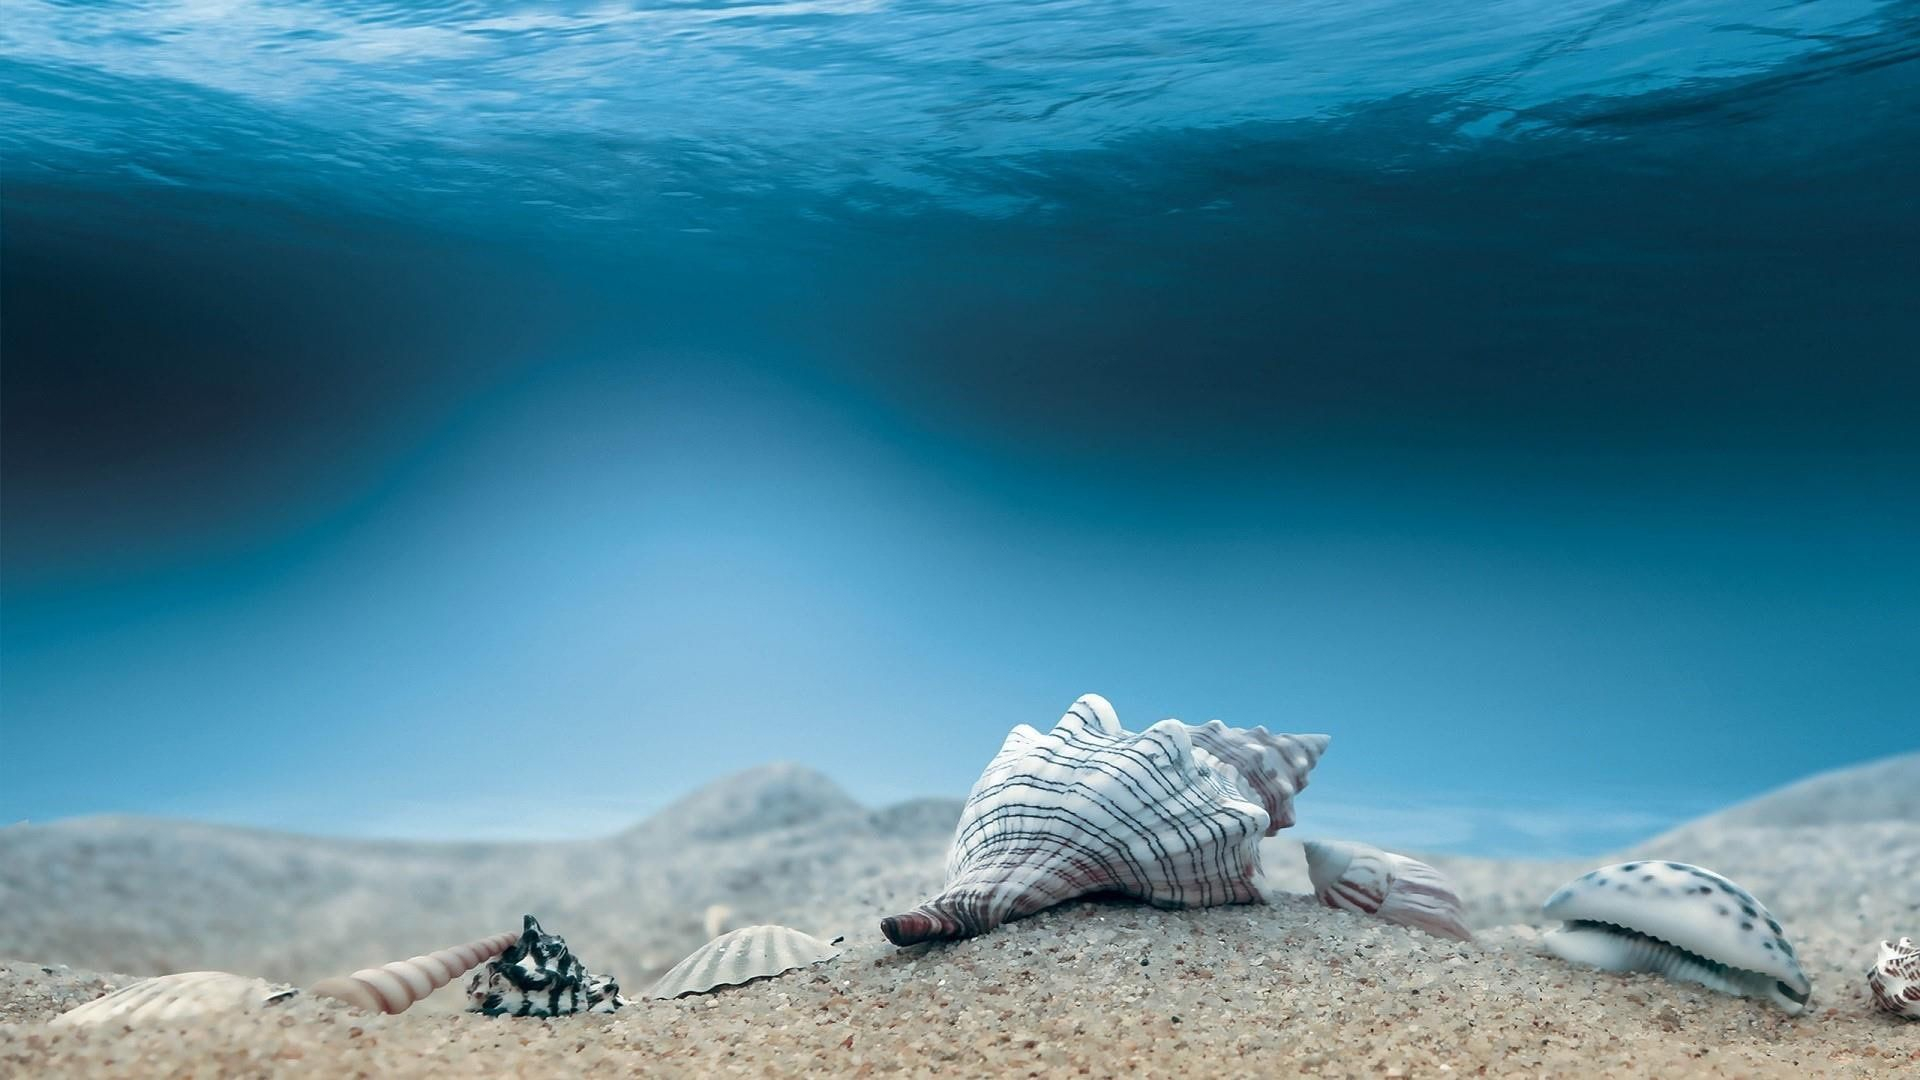 1920x1080 water #underwater #shells #seashells #shell #sea #sand #nature #1080P # wallpaper #hdwallpaper #desktop | Sea shells, Underwater sea, Ocean photography